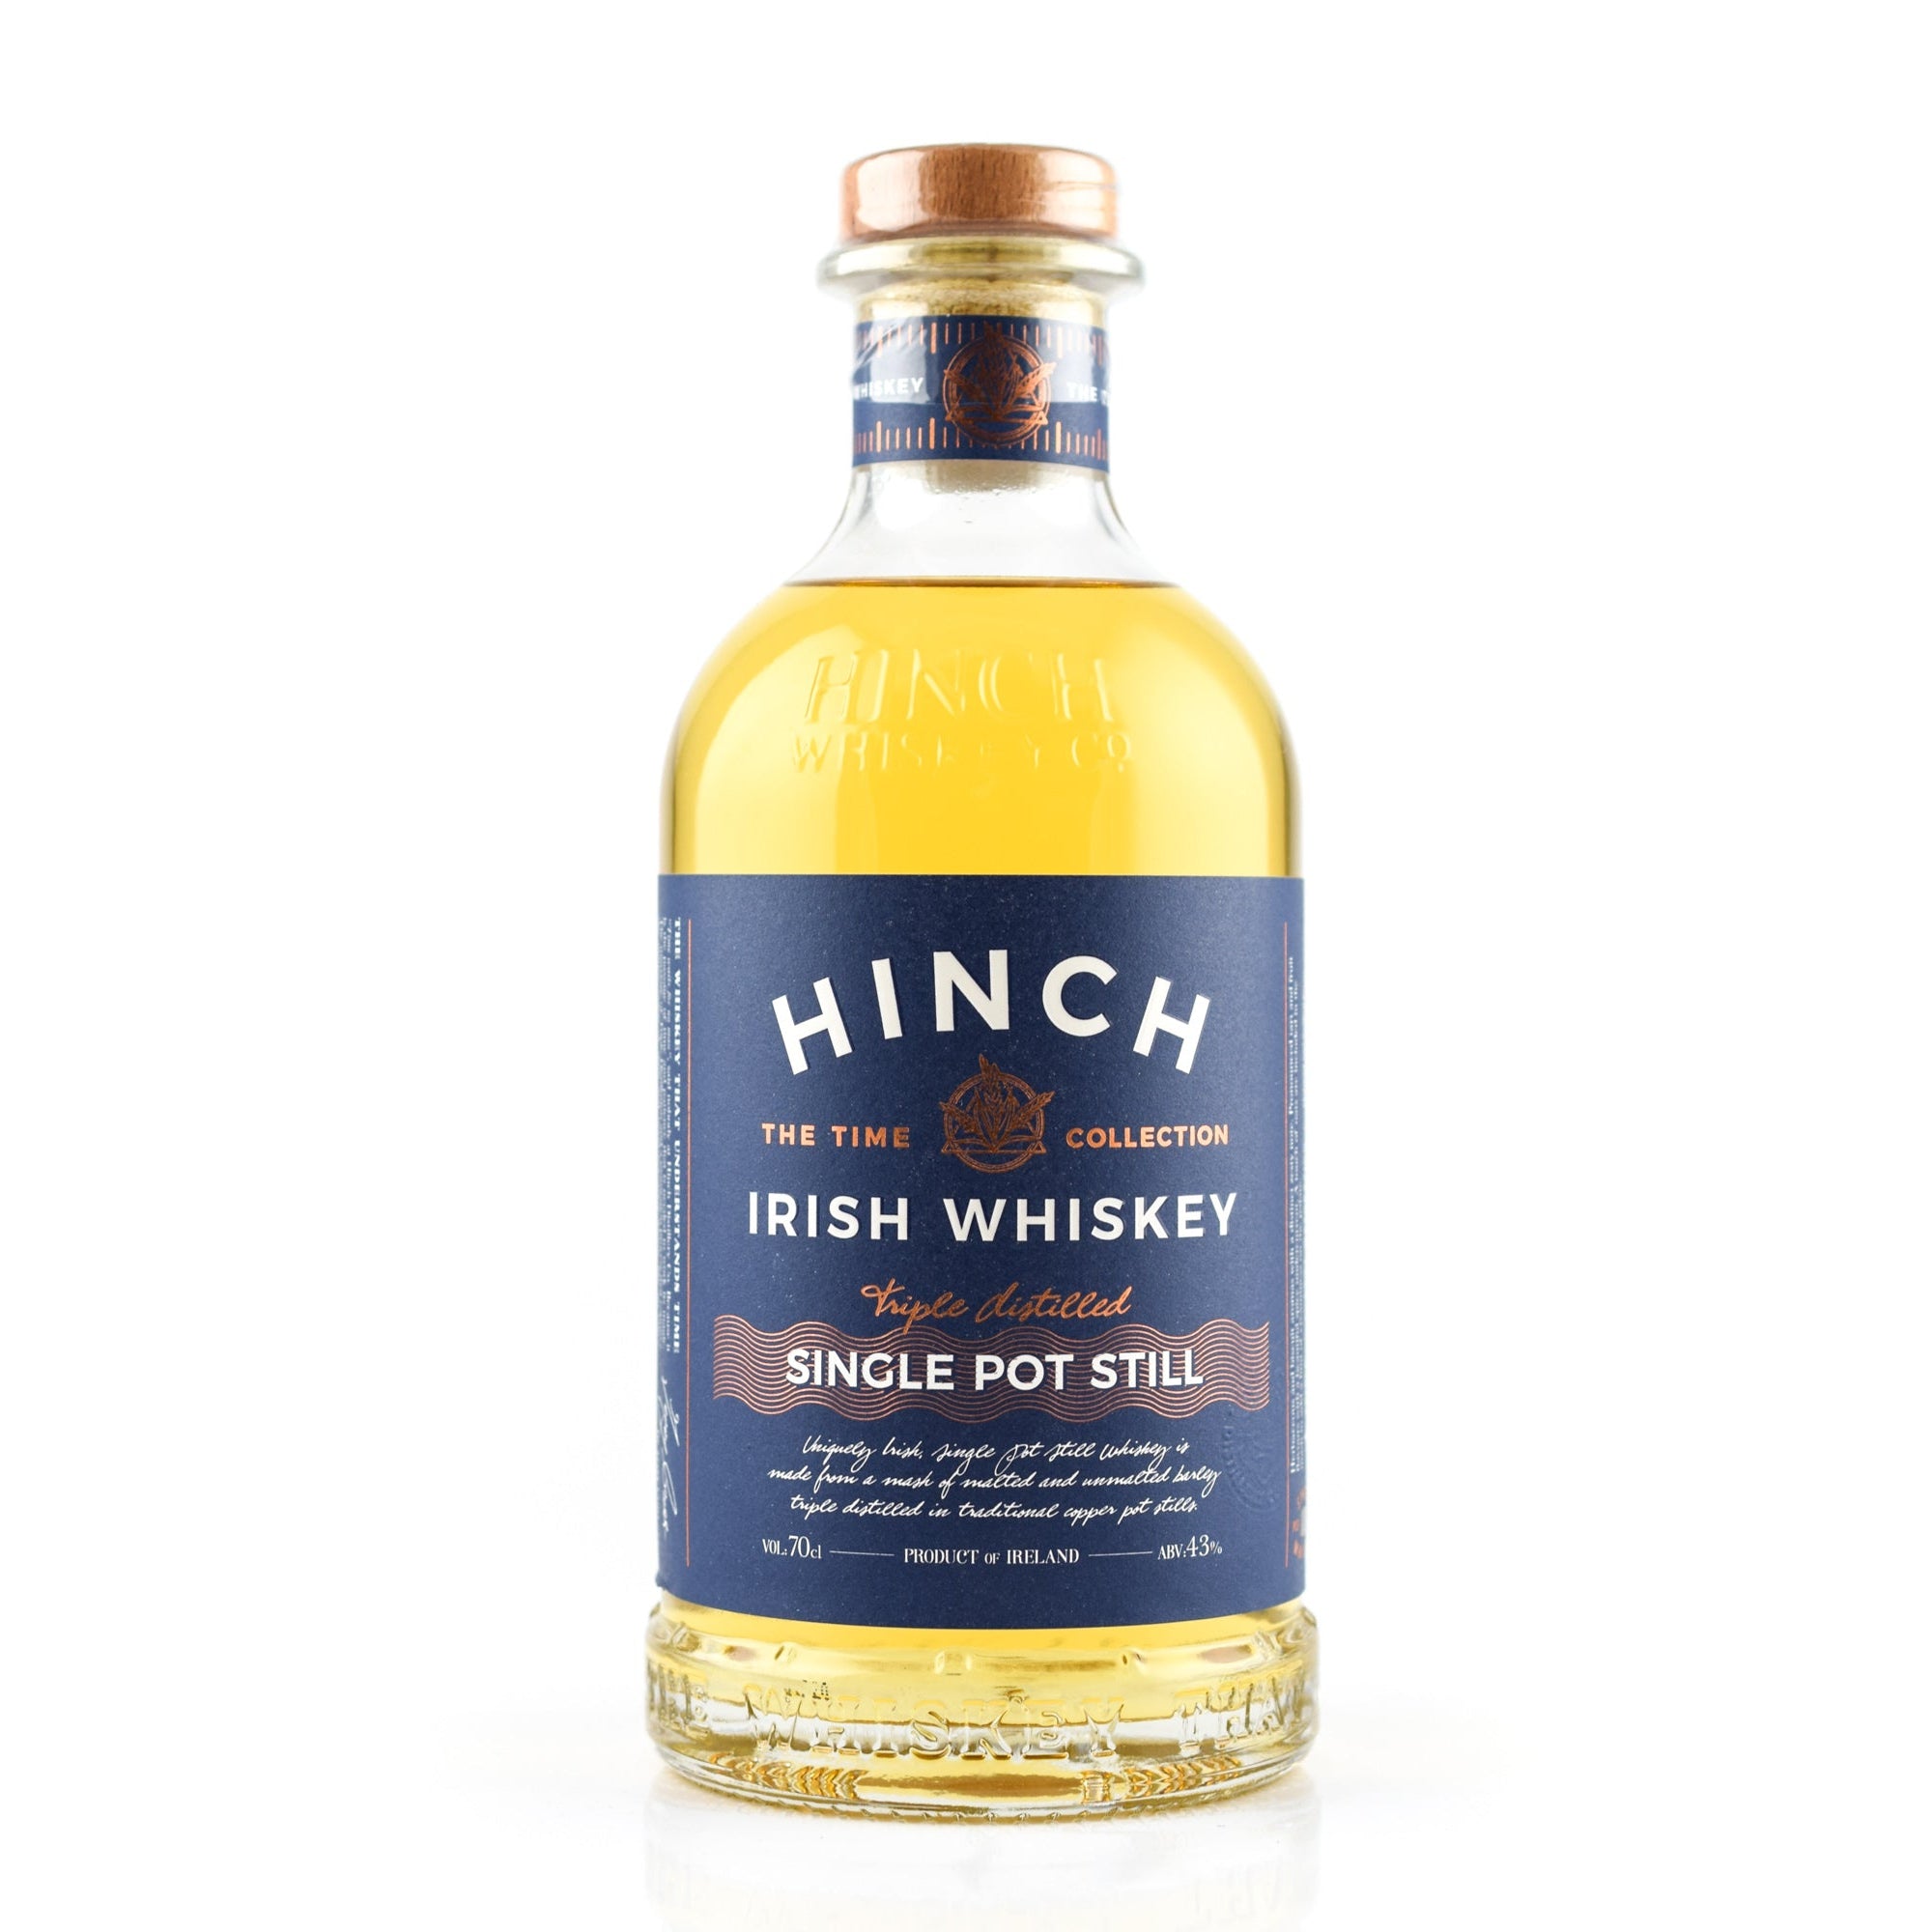 Hinch Single Pot Still Irish Whiskey 43% Vol. 0,7l